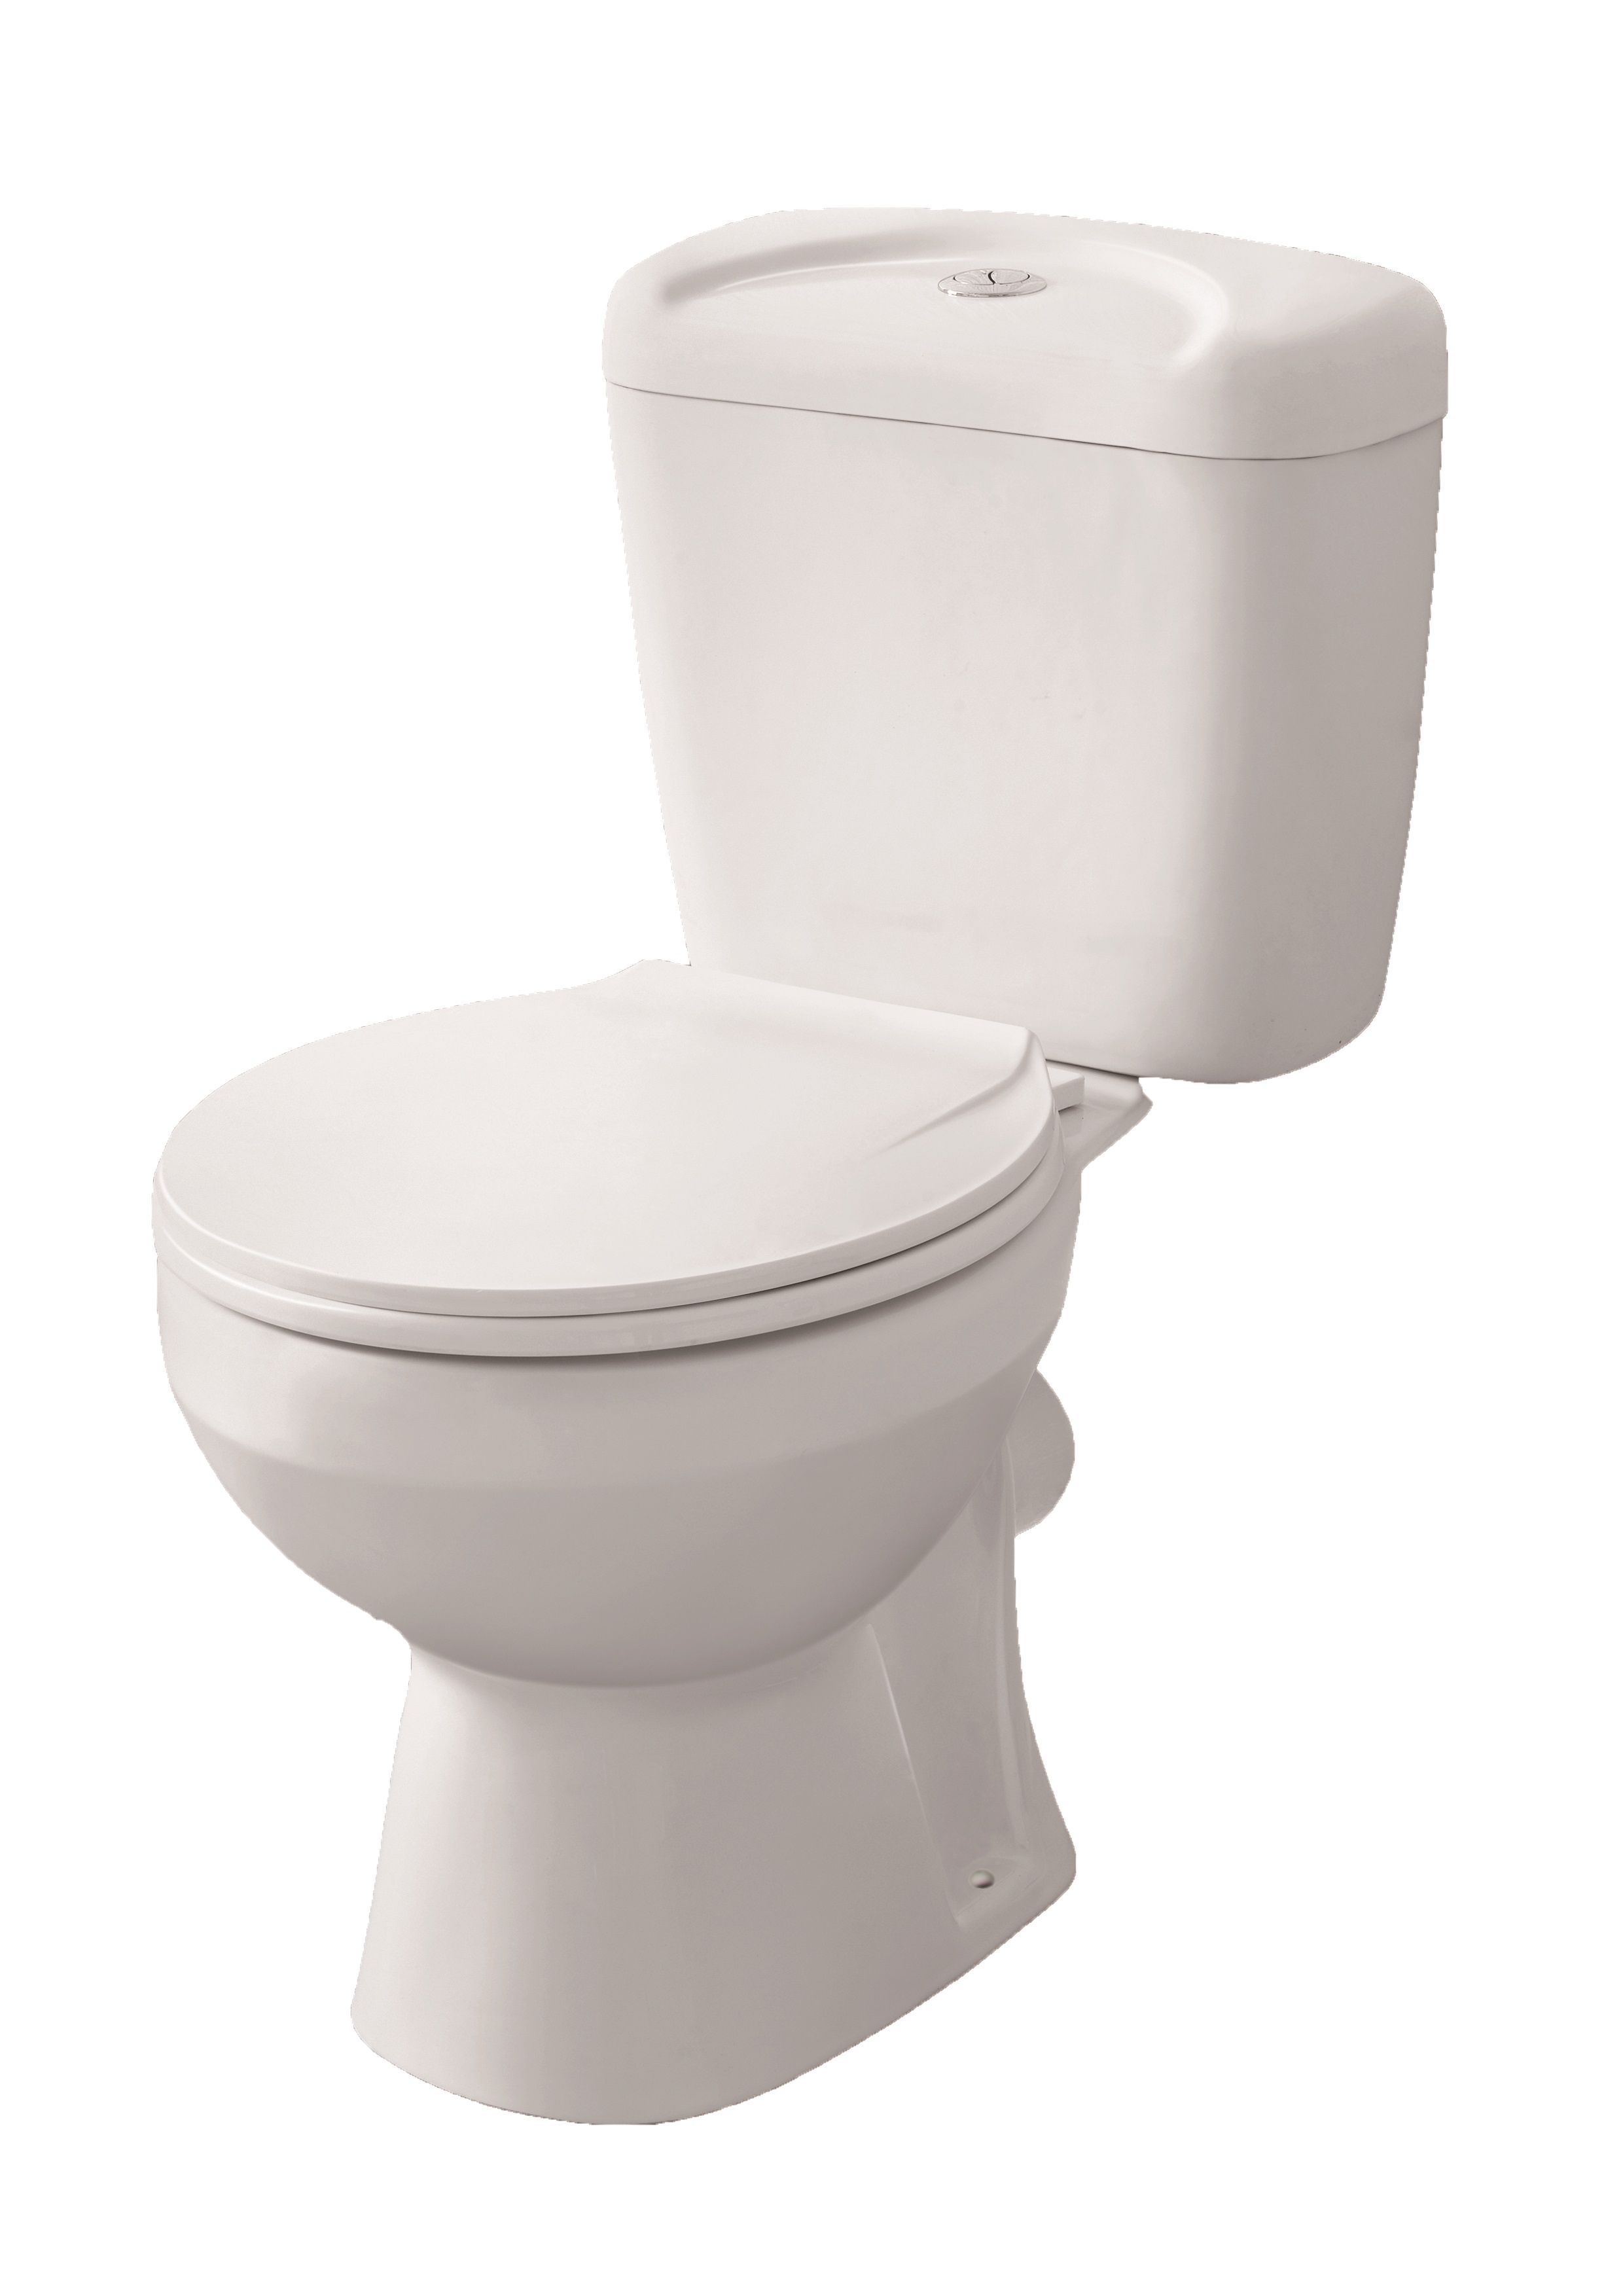 Bemis Hartford White Soft Close Toilet Seat Departments Diy At B Q